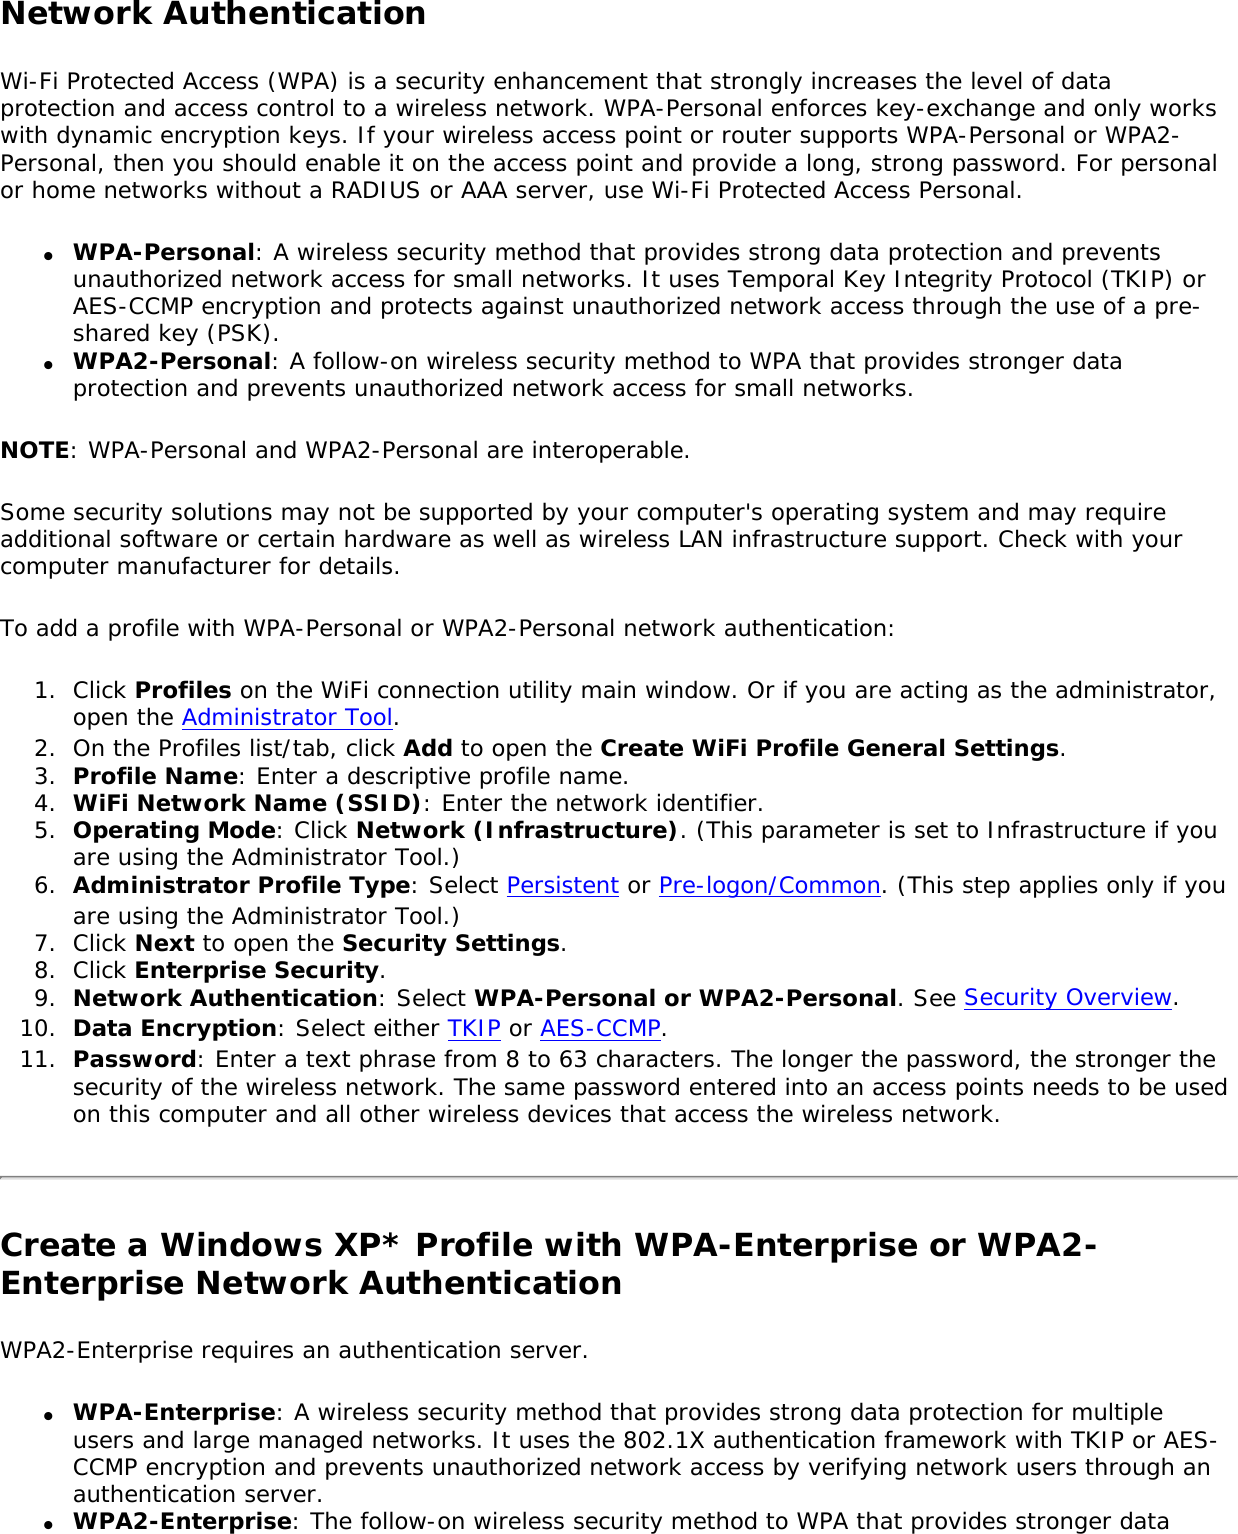 Page 161 of Intel 112BNHU Intel Centrino Wireless-N 1000 User Manual Contents